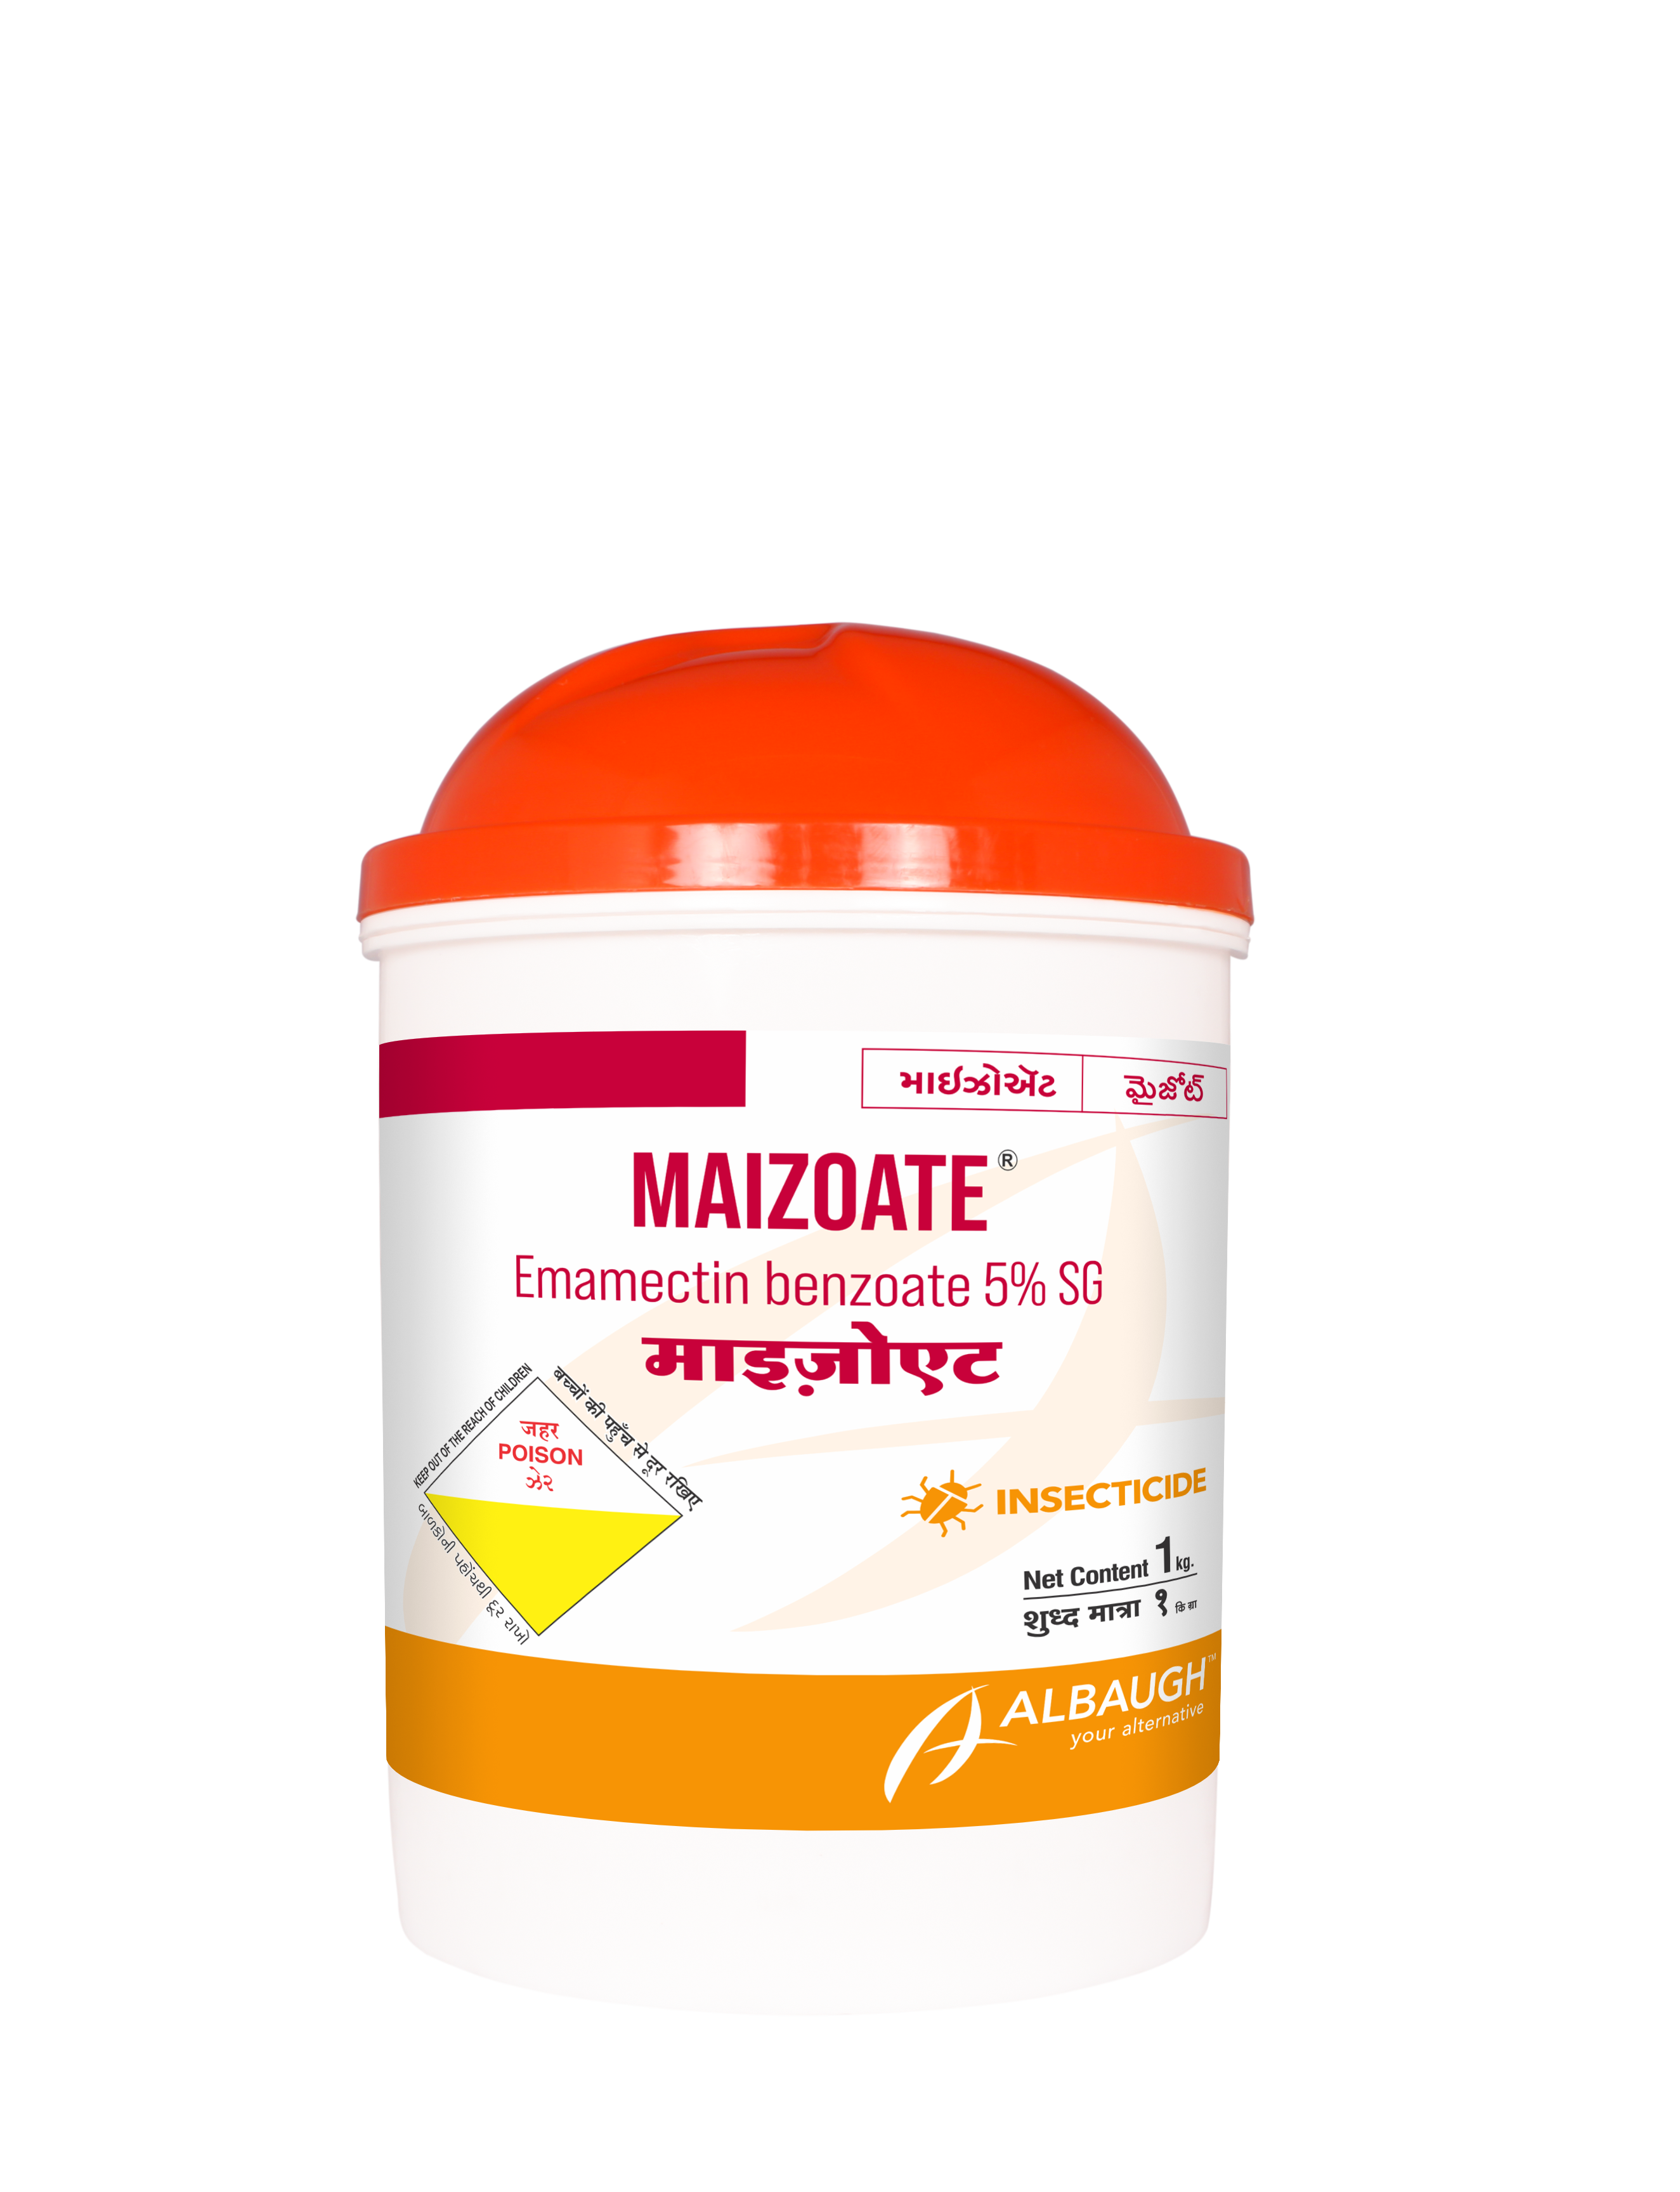 Maizoate: Emamectin Benzoate 5% SG